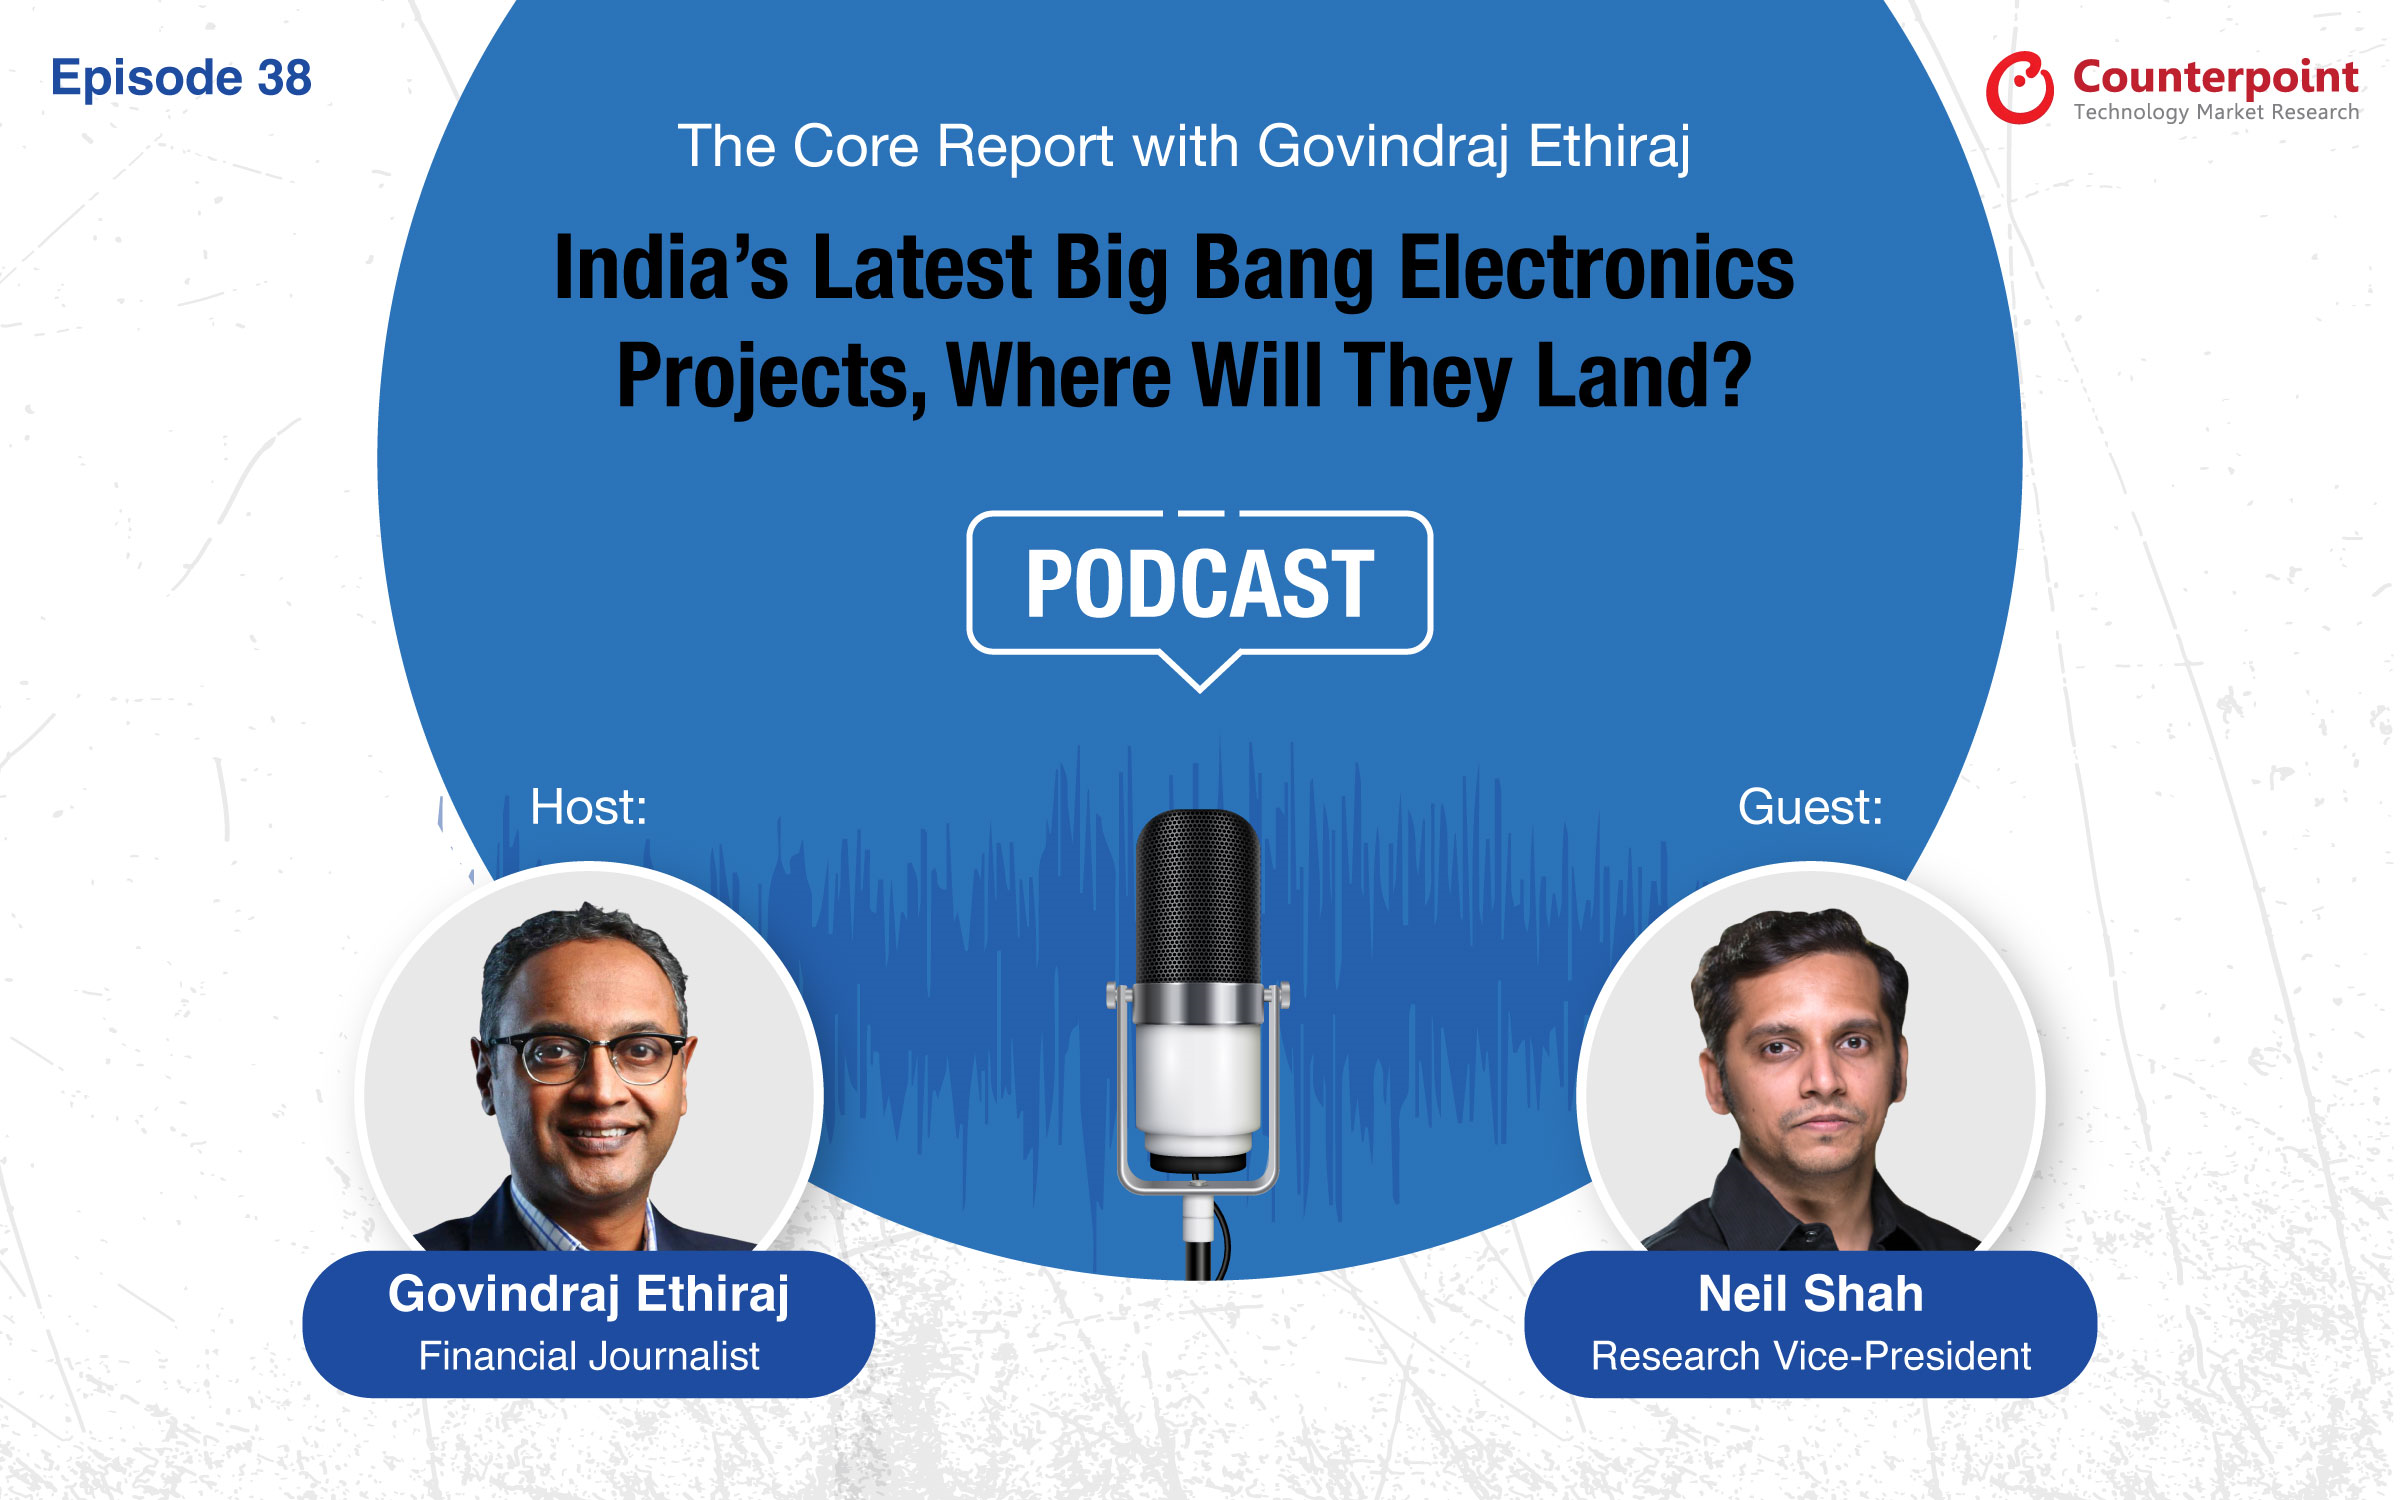 Podcast: The Core Report with Govindraj Ethiraj Ft. Neil Shah